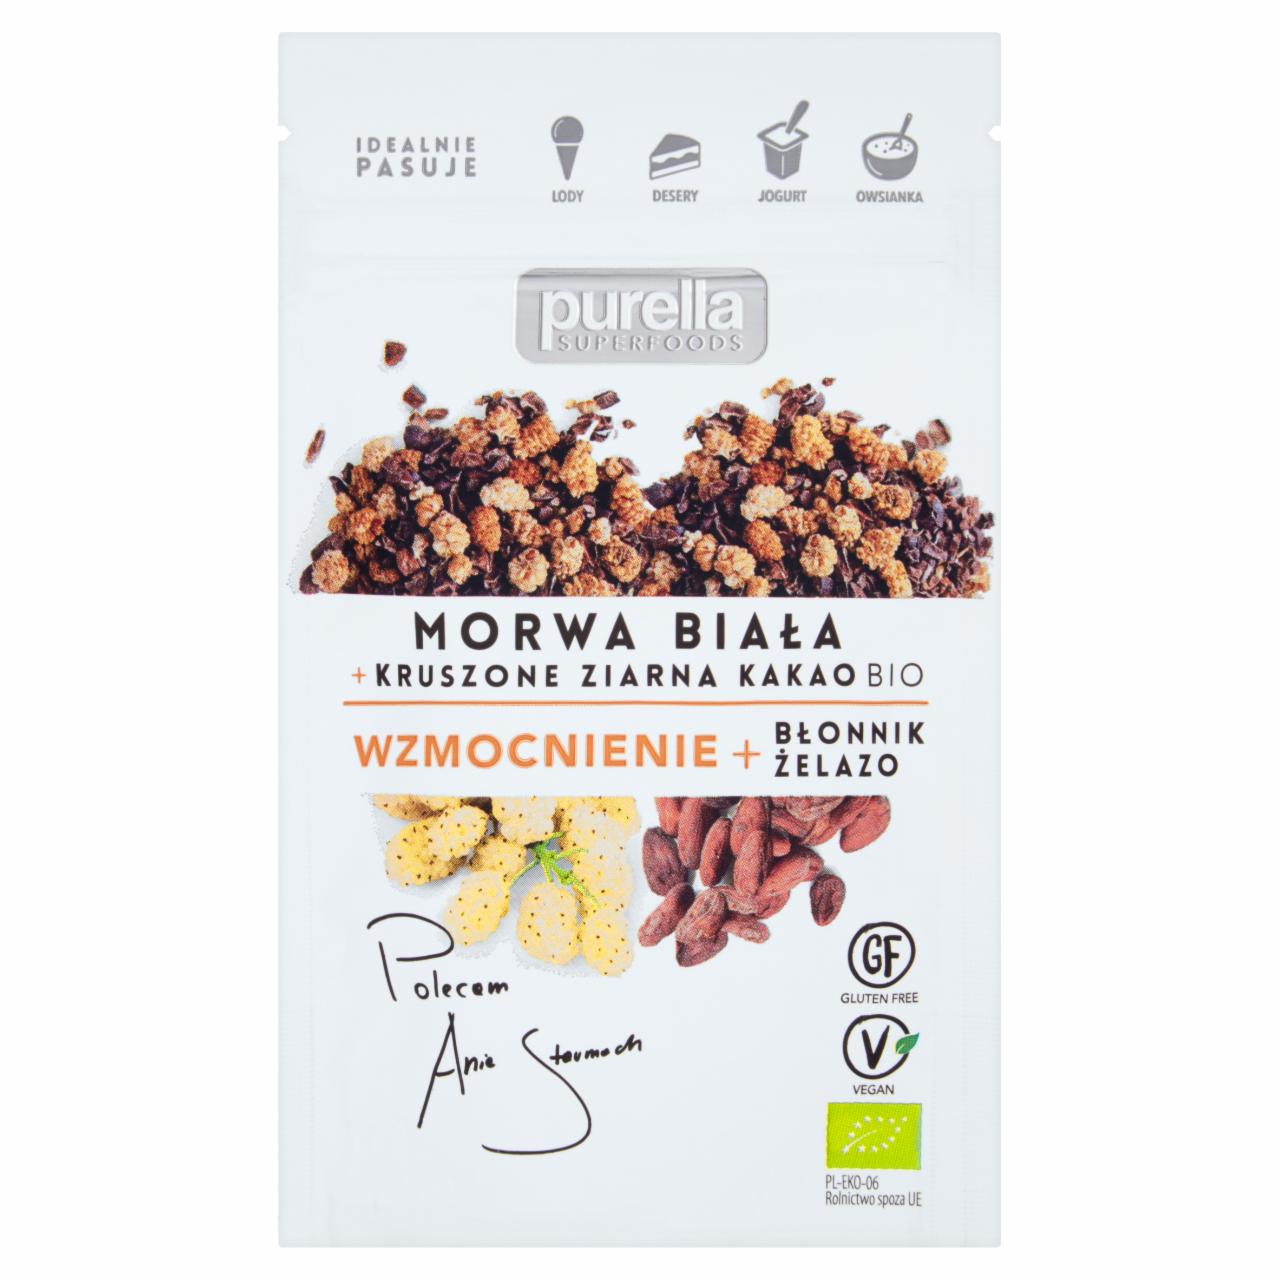 Zdjęcia - Purella Superfoods Morwa biała i kruszone ziarna kakao Bio 45 g